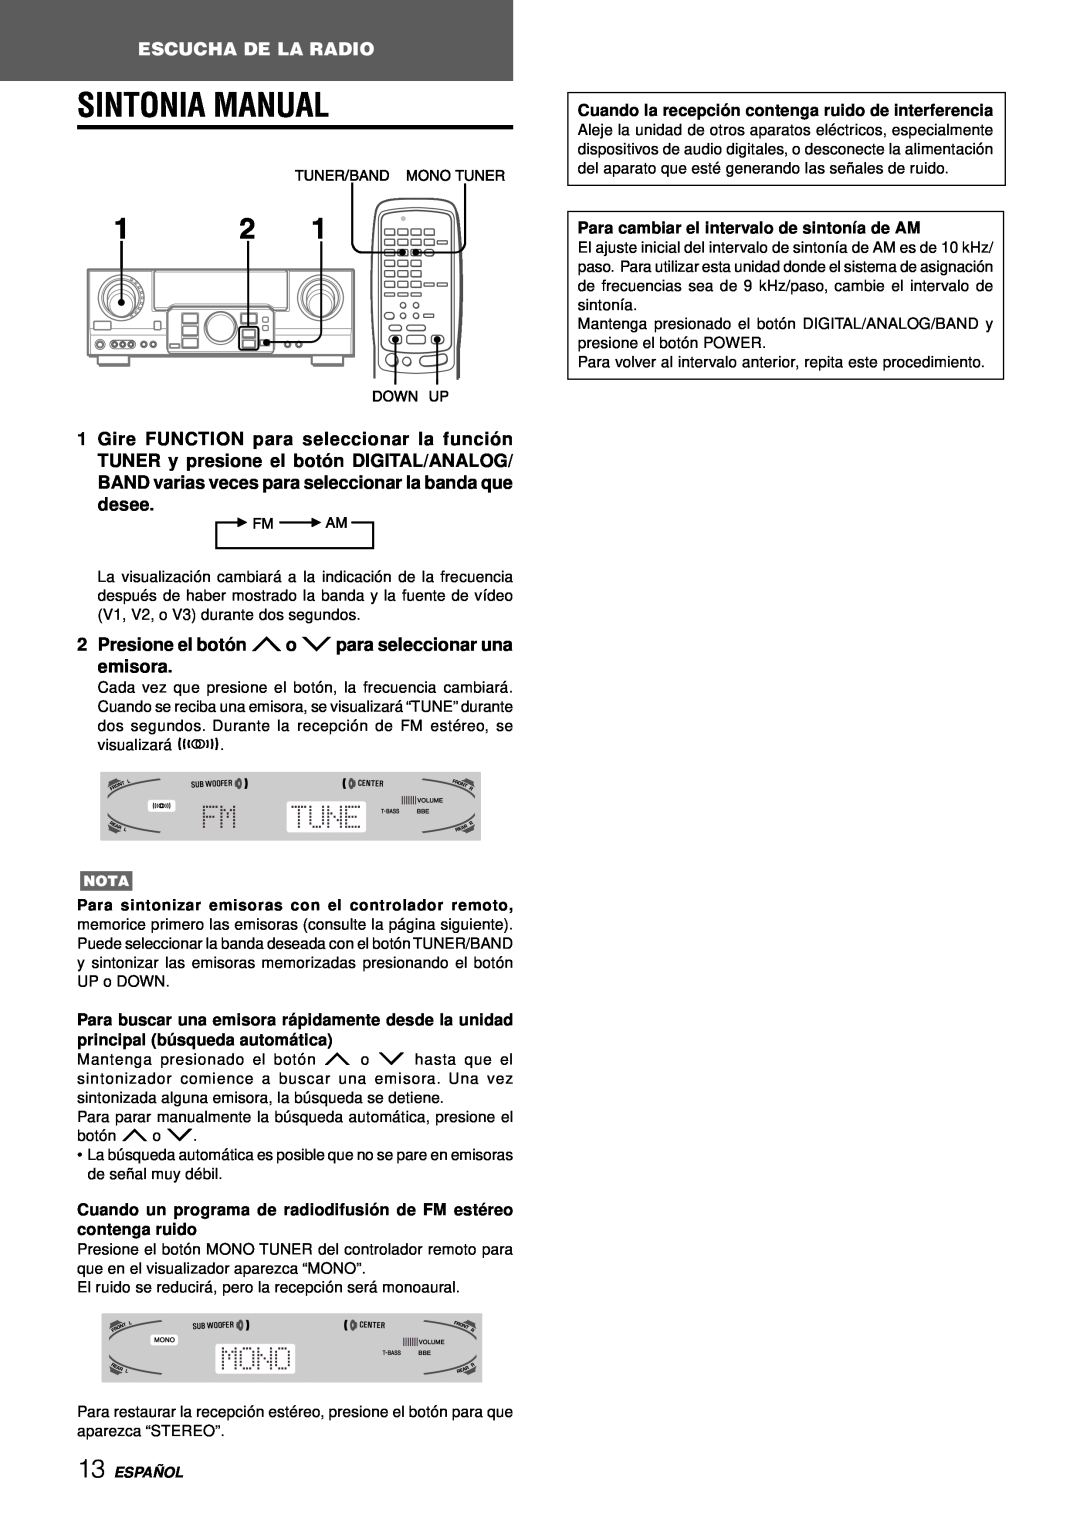 Aiwa AV-D77 manual Sintonia Manual, Escucha De La Radio 